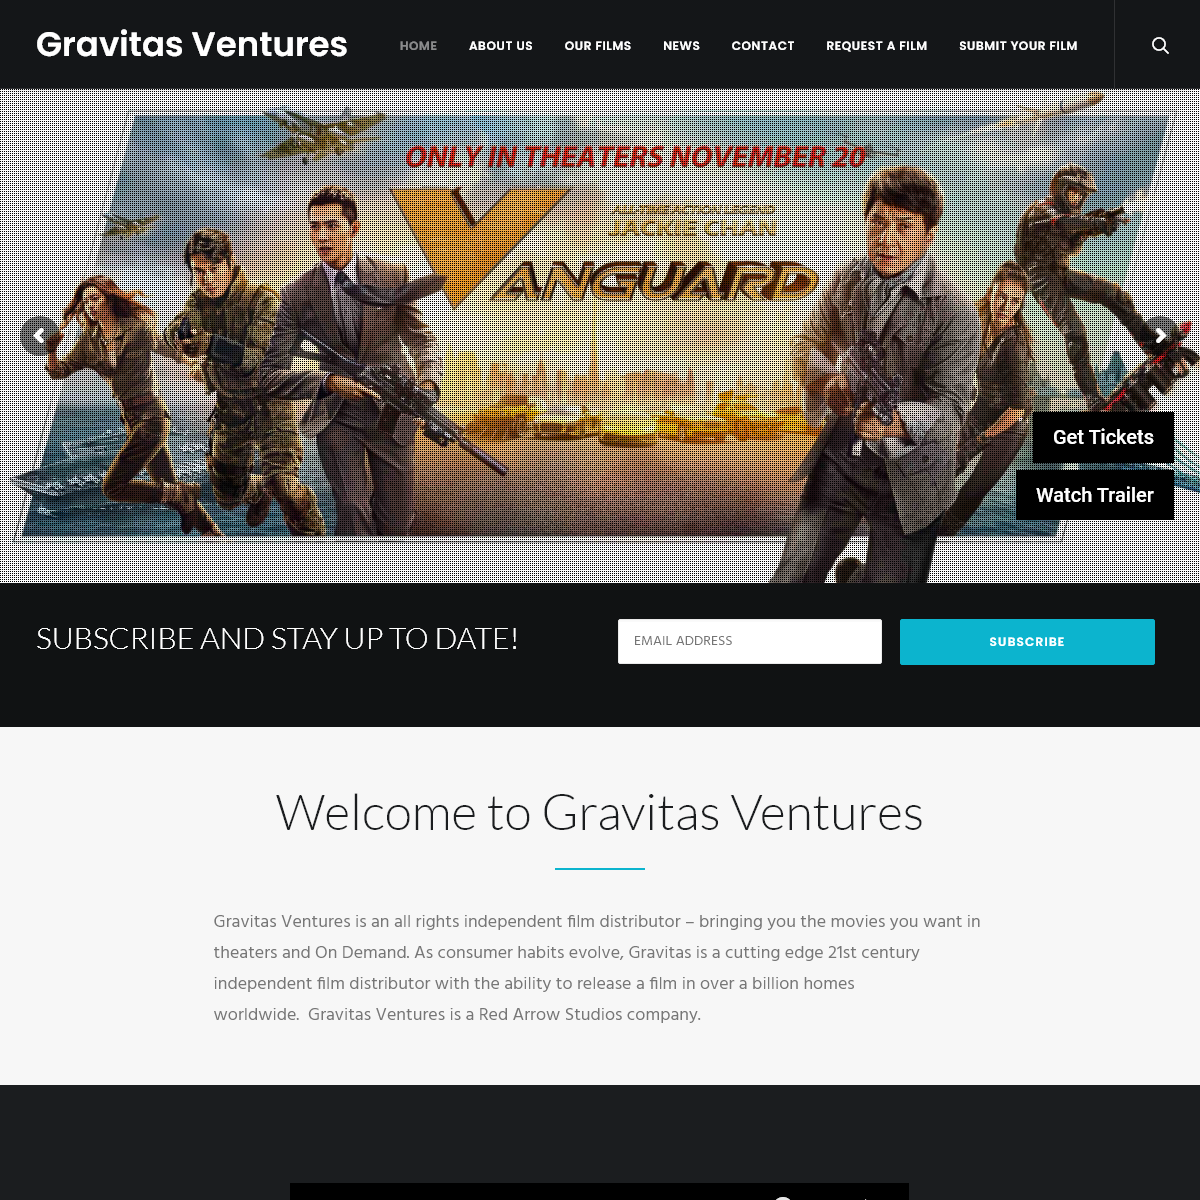 A complete backup of gravitasventures.com